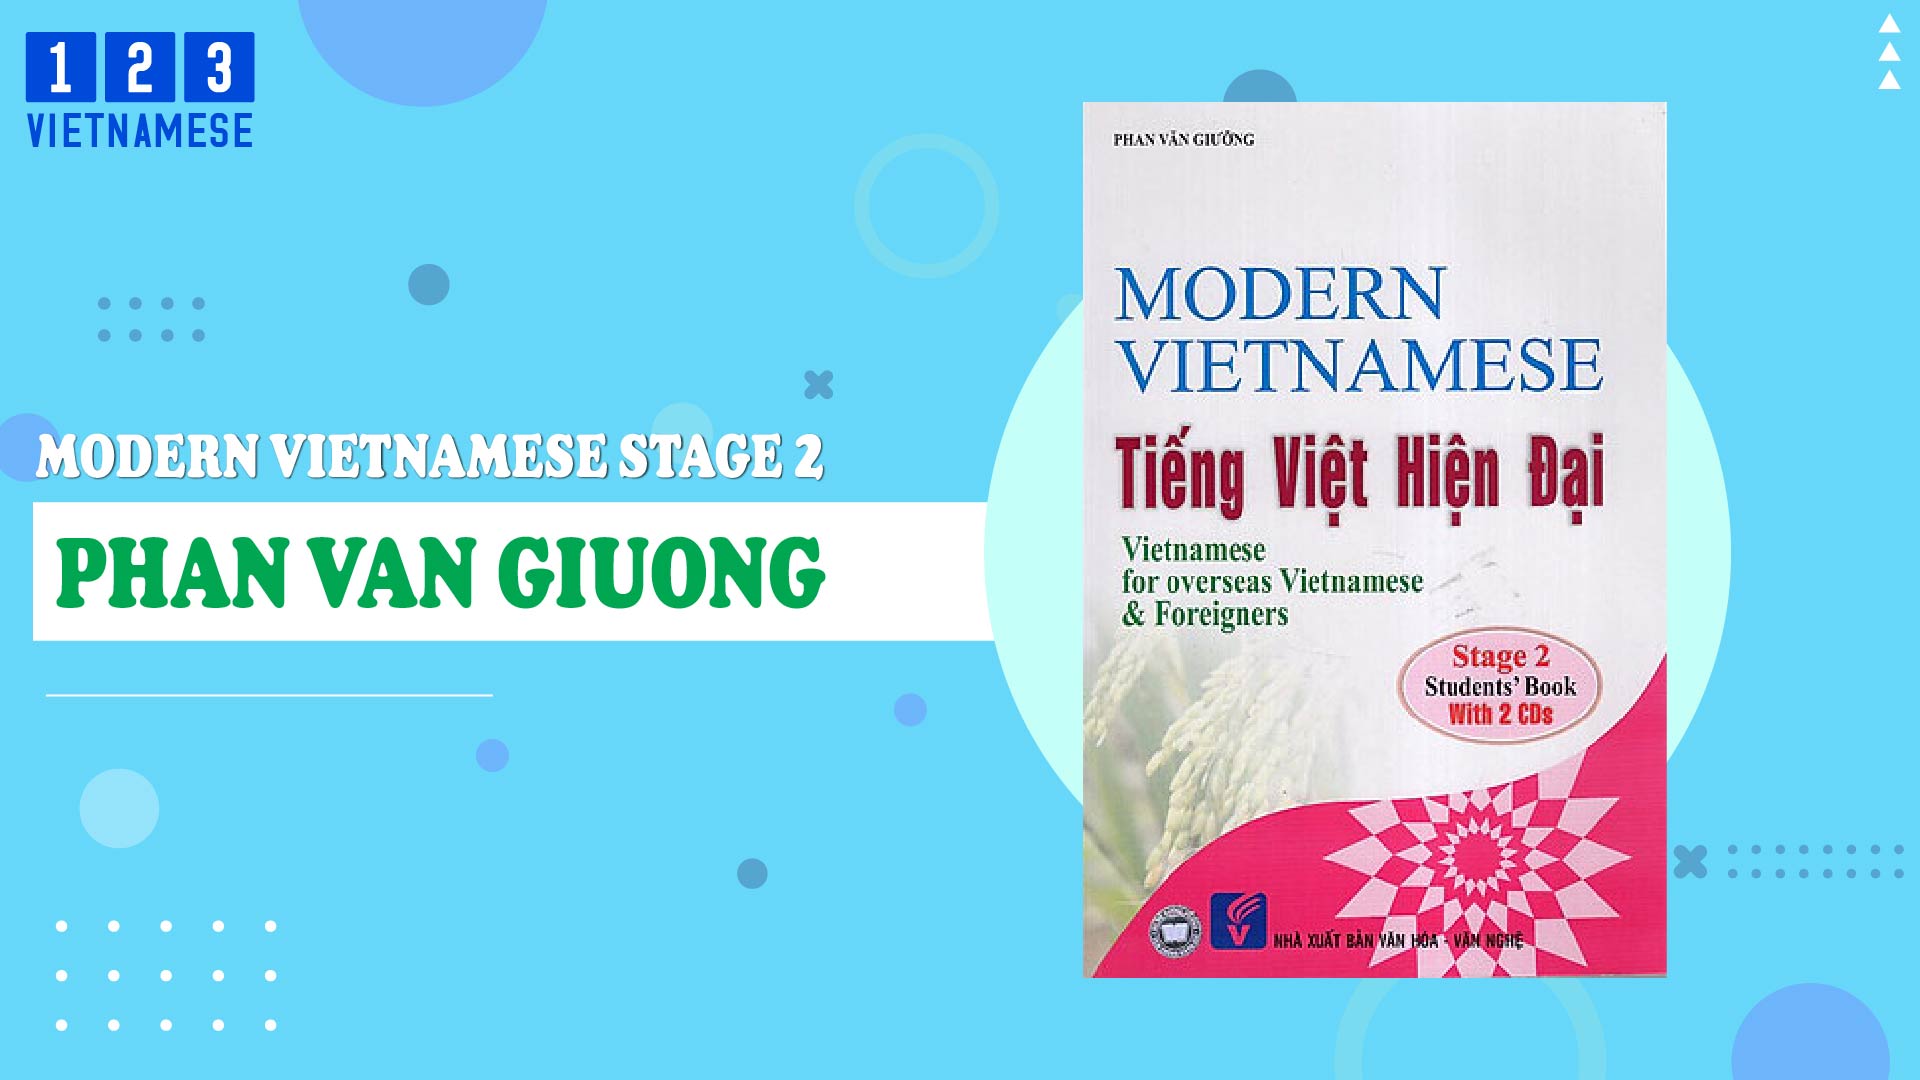 Modern Vietnamese stage 2 - Phan Van Giuong [Learning Vietnamese book]